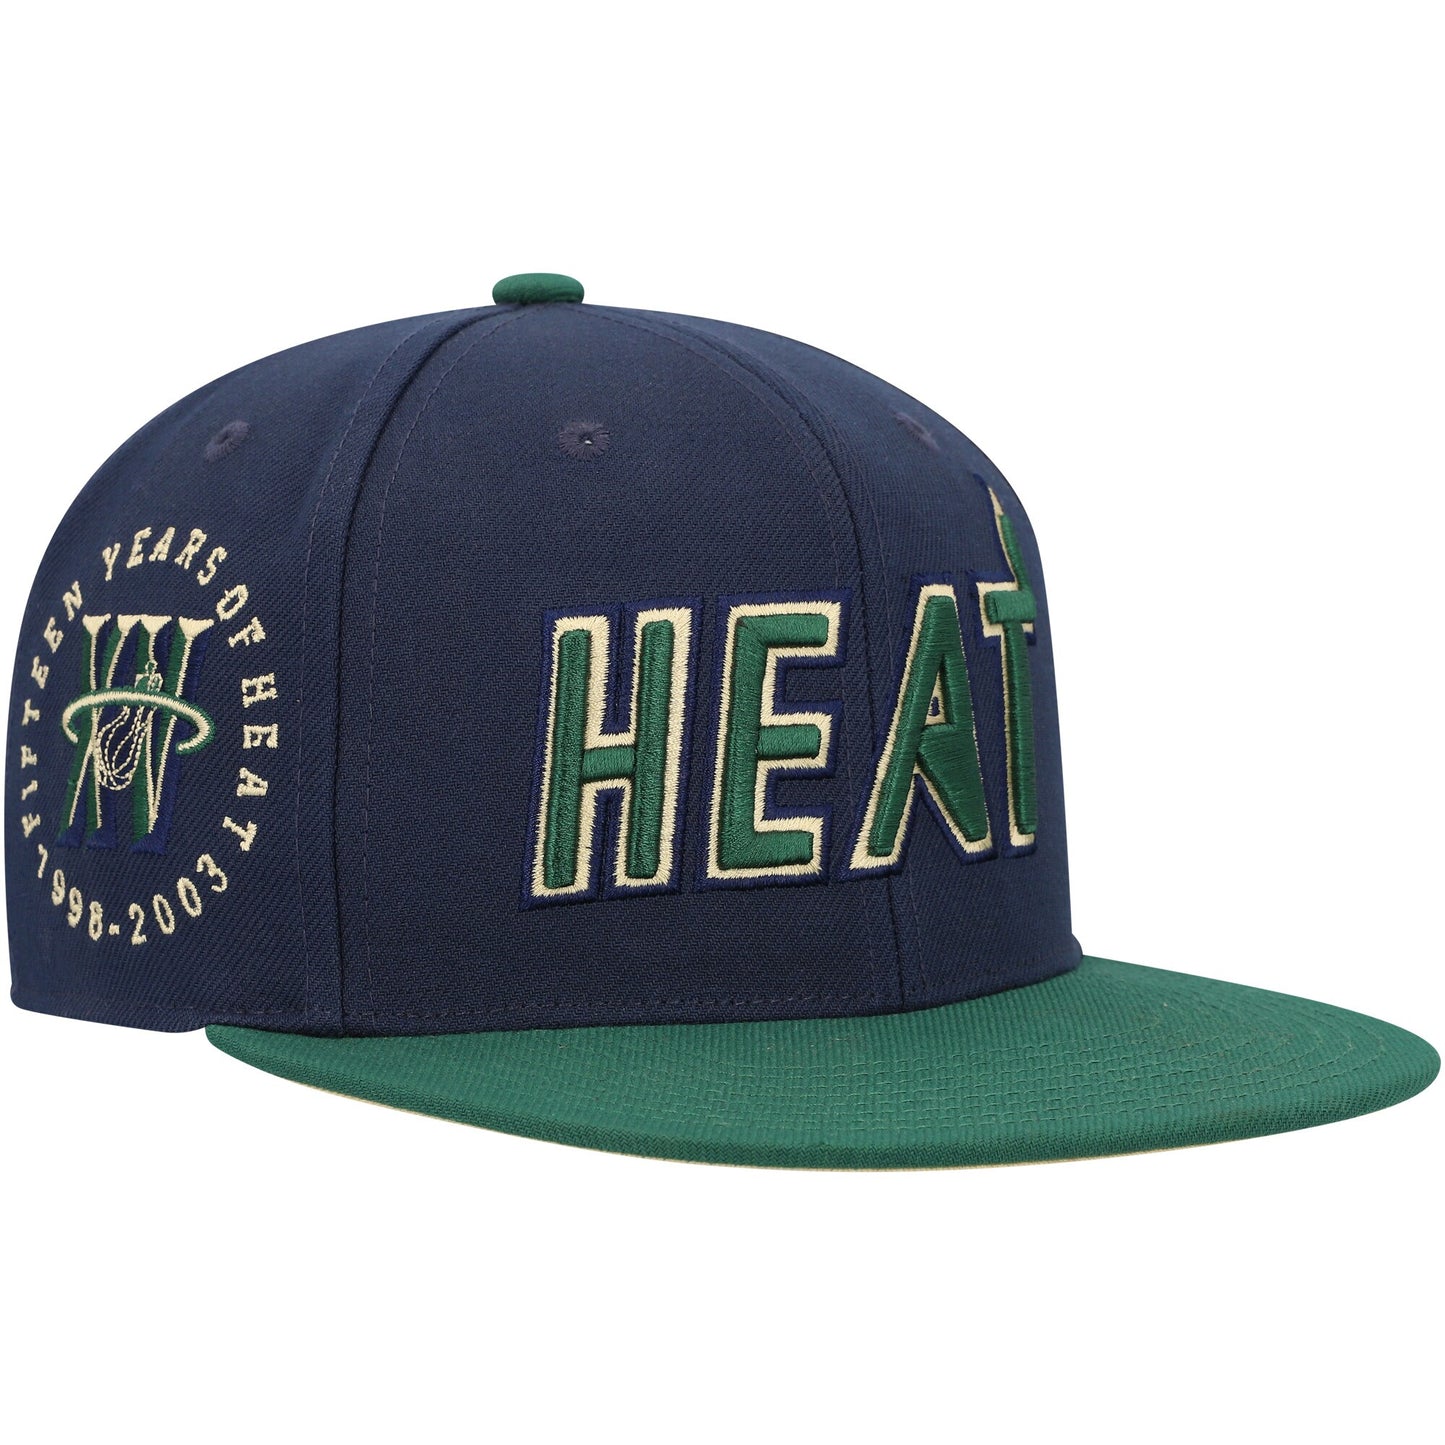 Miami Heat Mitchell & Ness 15th Anniversary Hardwood Classics Grassland Fitted Hat - Navy/Green